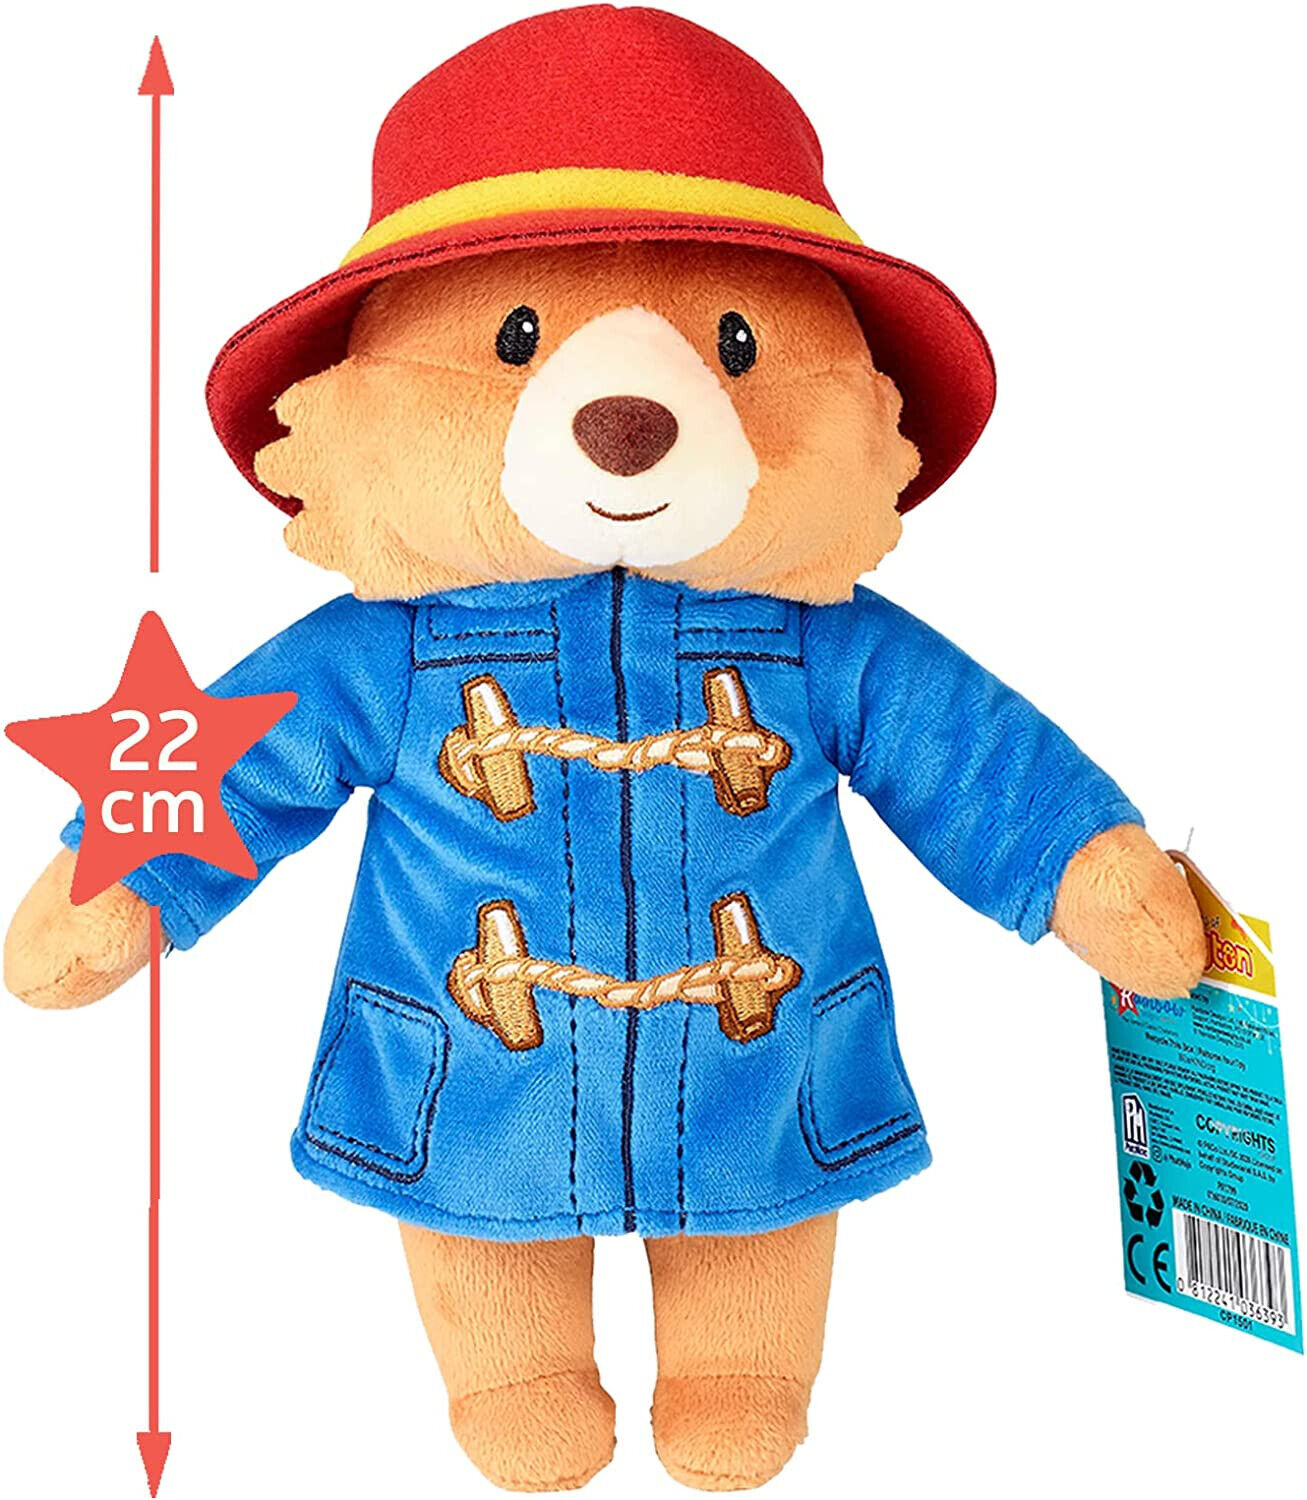 22cm Paddington Bear Plush Toy - Collectible Edition